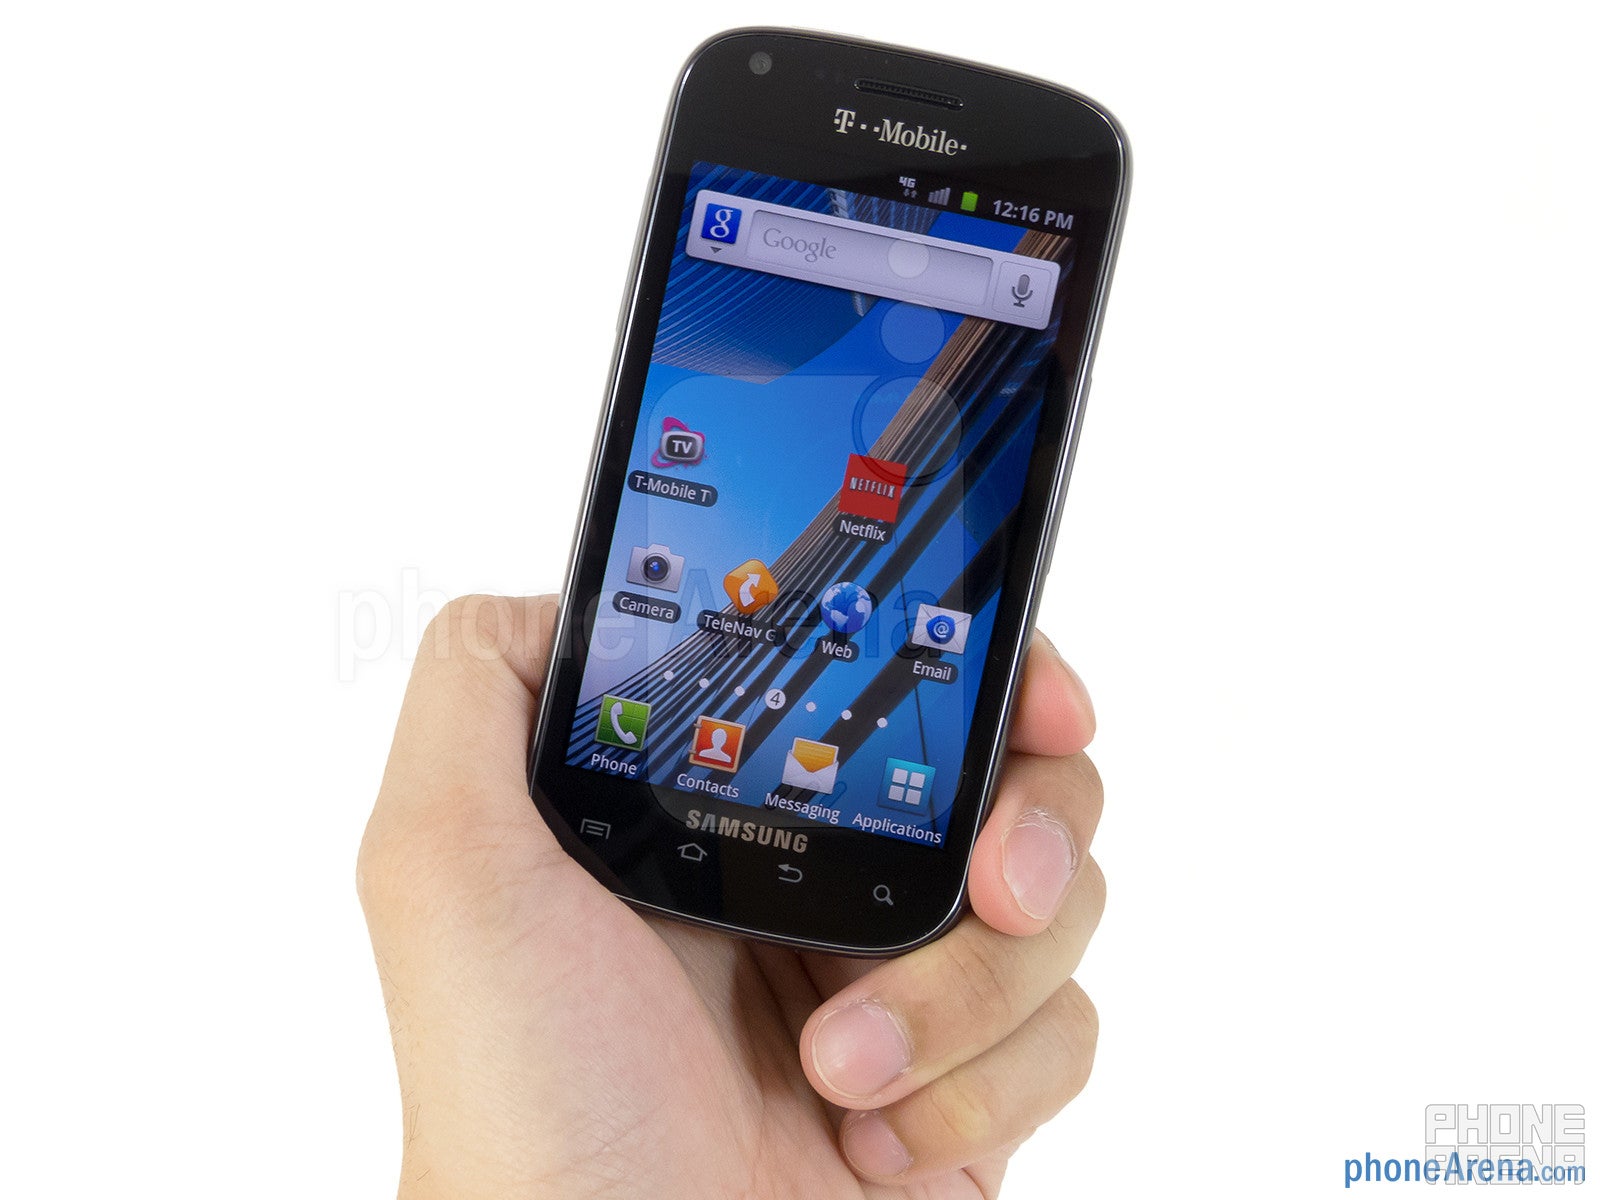 Samsung Galaxy S Blaze 4G Review